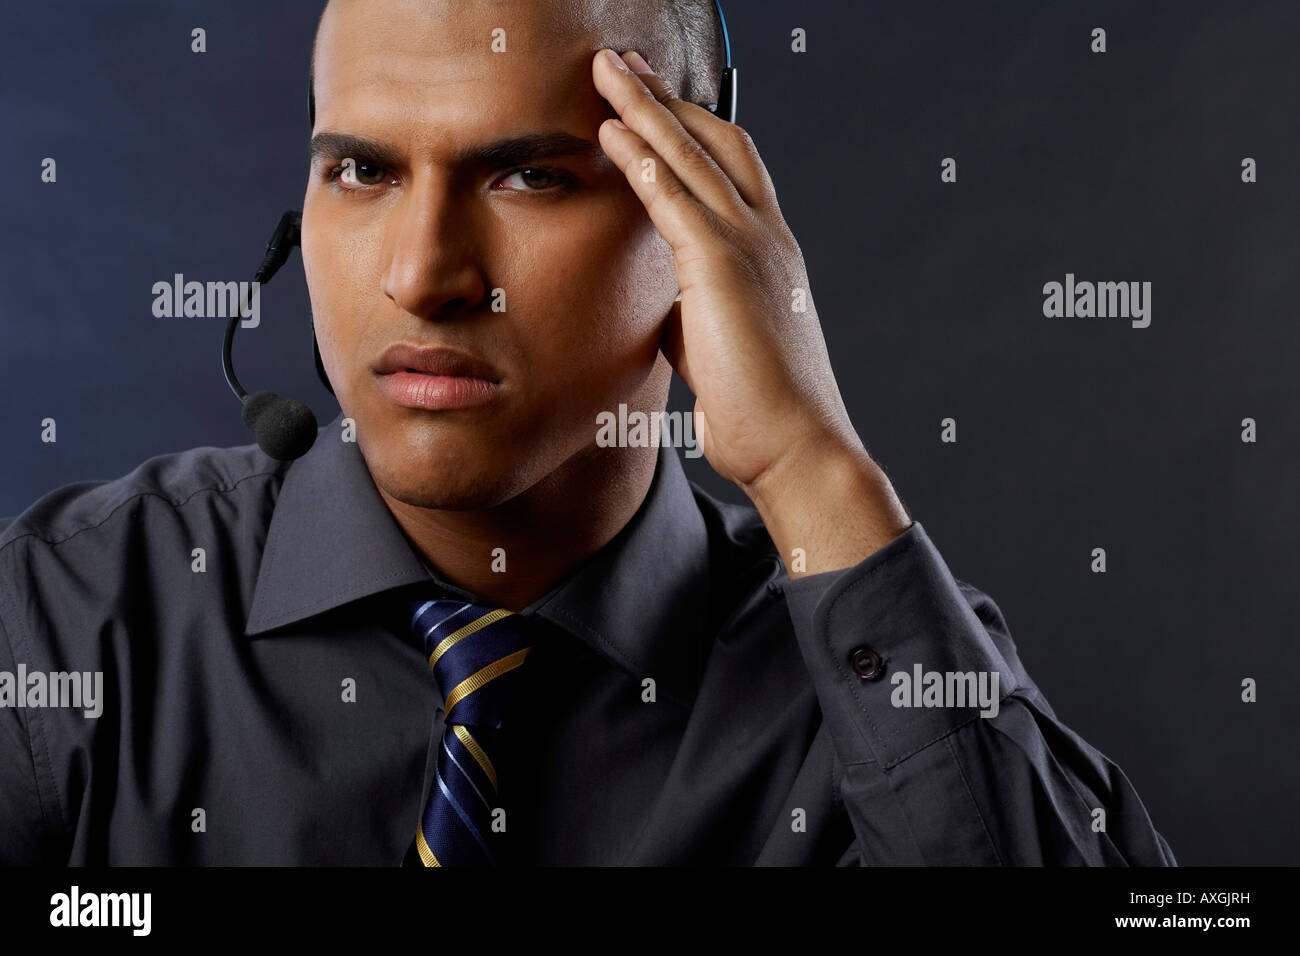 Businessman Wearing Headset Stock Photo